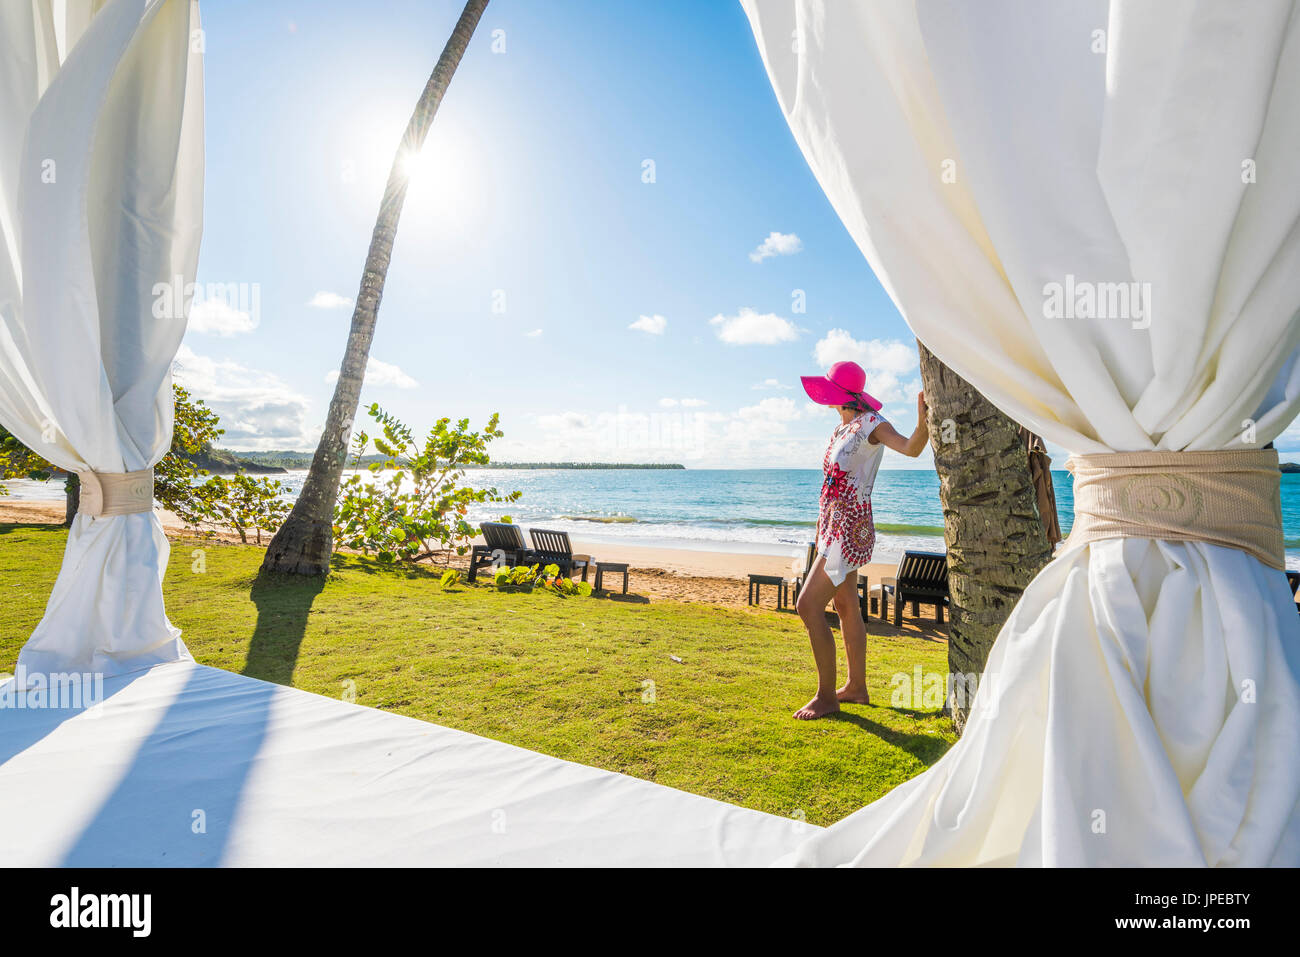 Playa Moron, Las Terrenas, Samana Peninsula, Dominican Republic. Beautiful woman admiring the view from by a beach bed (MR). Stock Photo